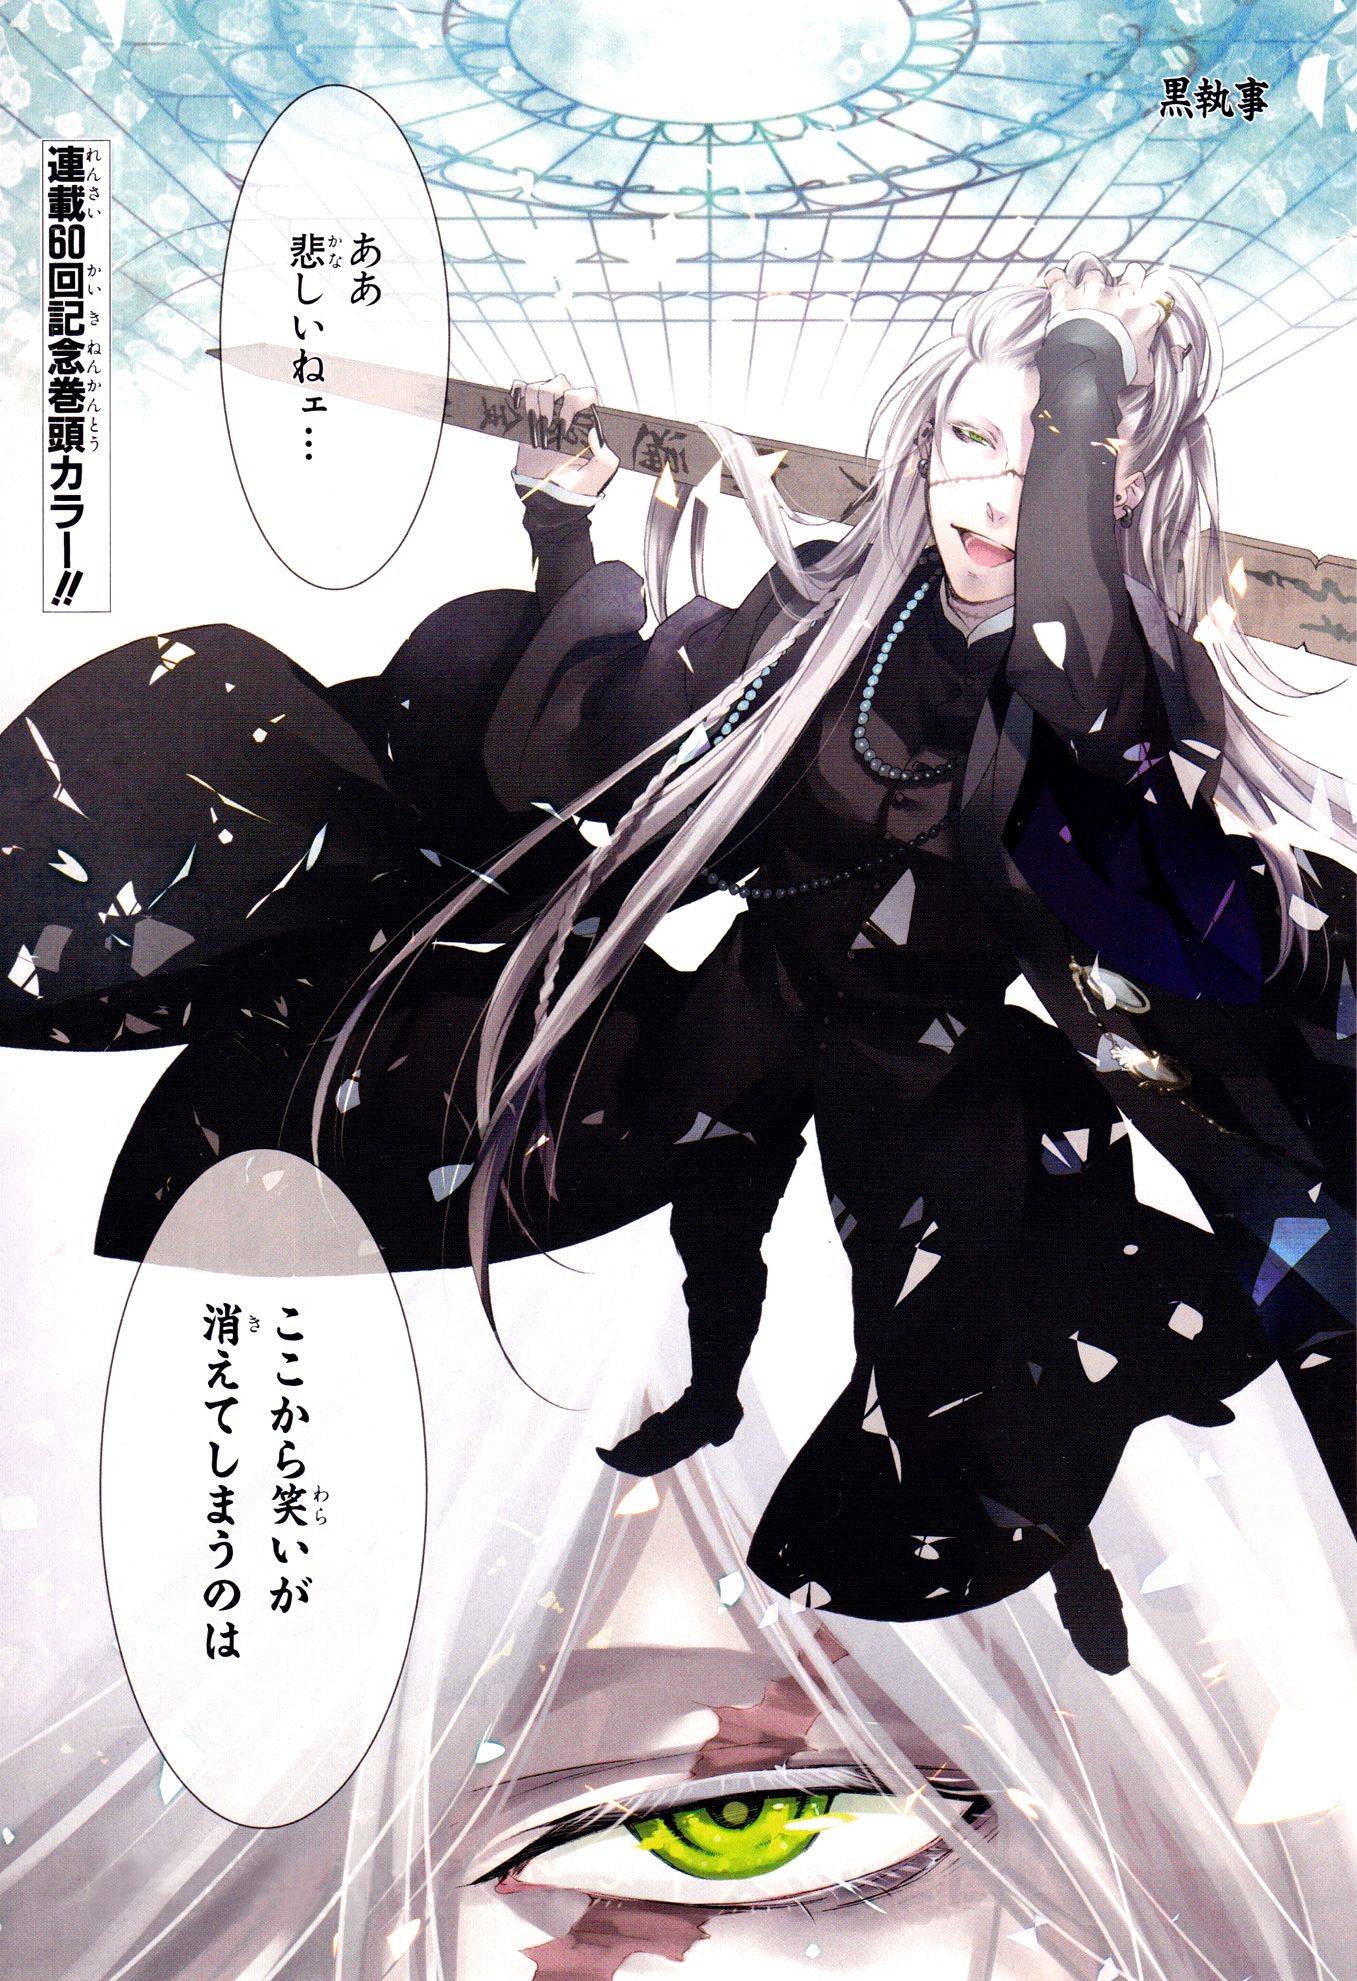 Kuroshitsuji (Black Butler), Mobile Wallpaper Anime Image Board